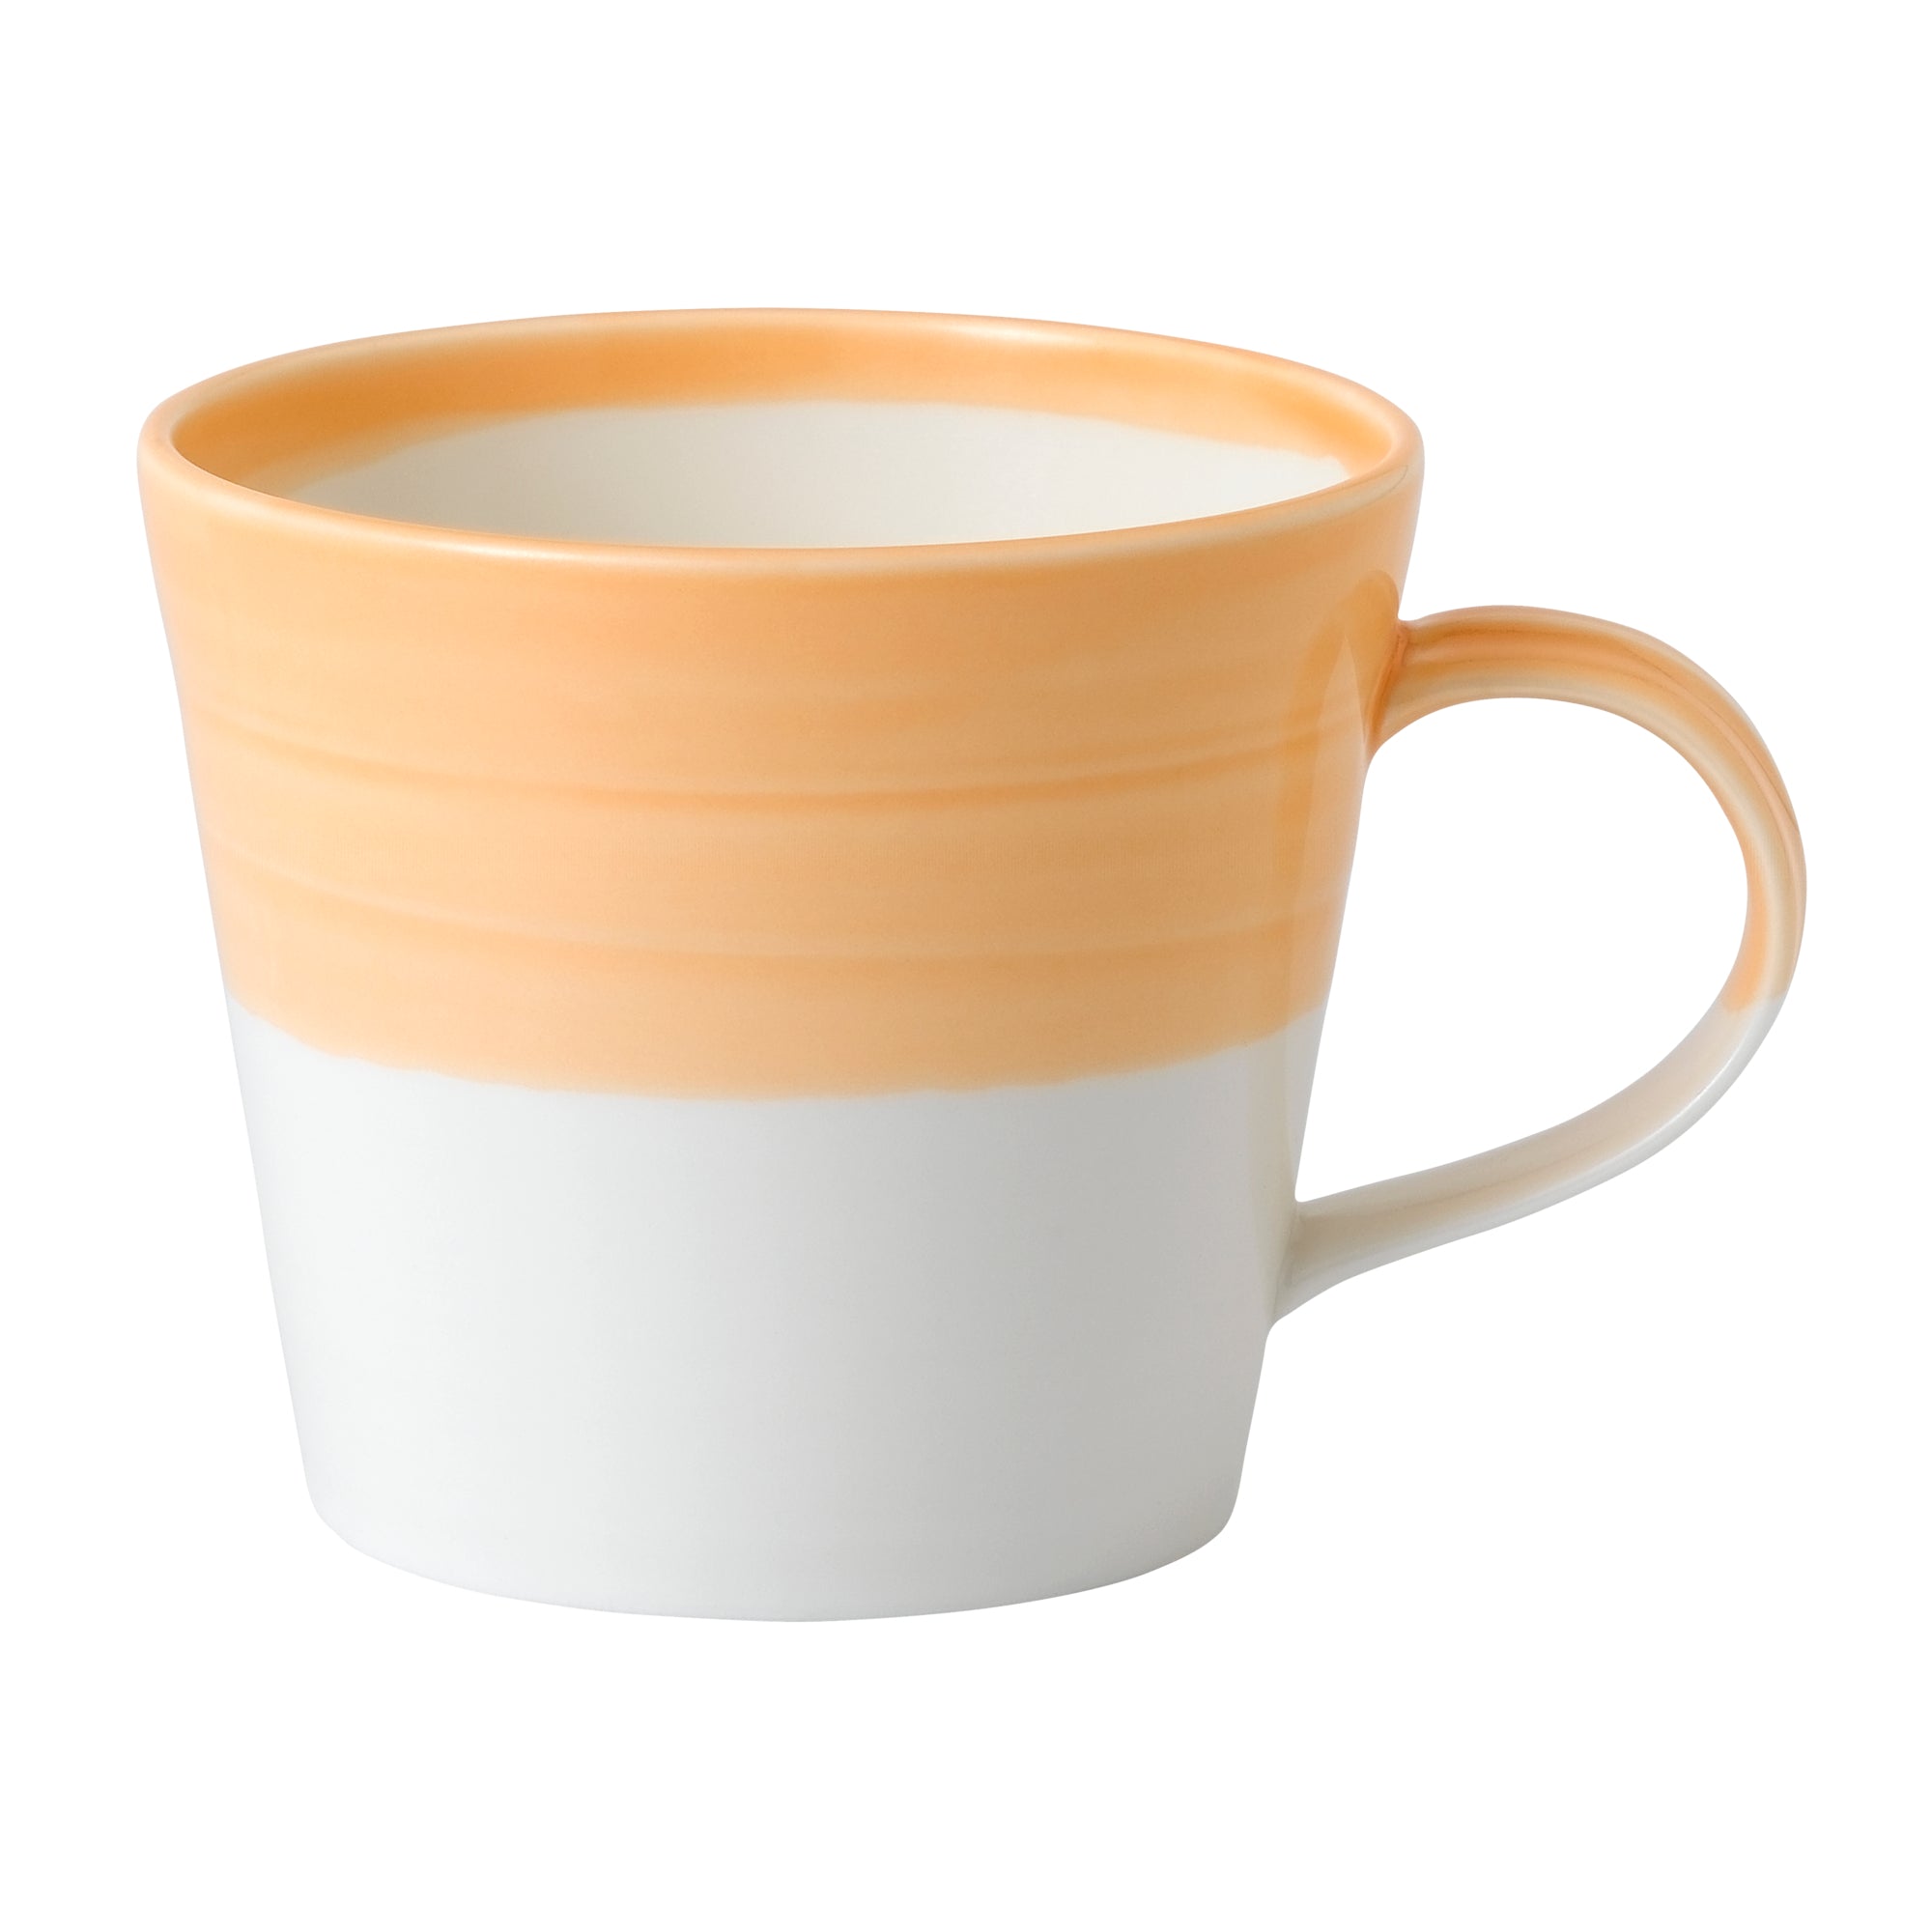 Royal Doulton 1815 Brights Mug - Orange